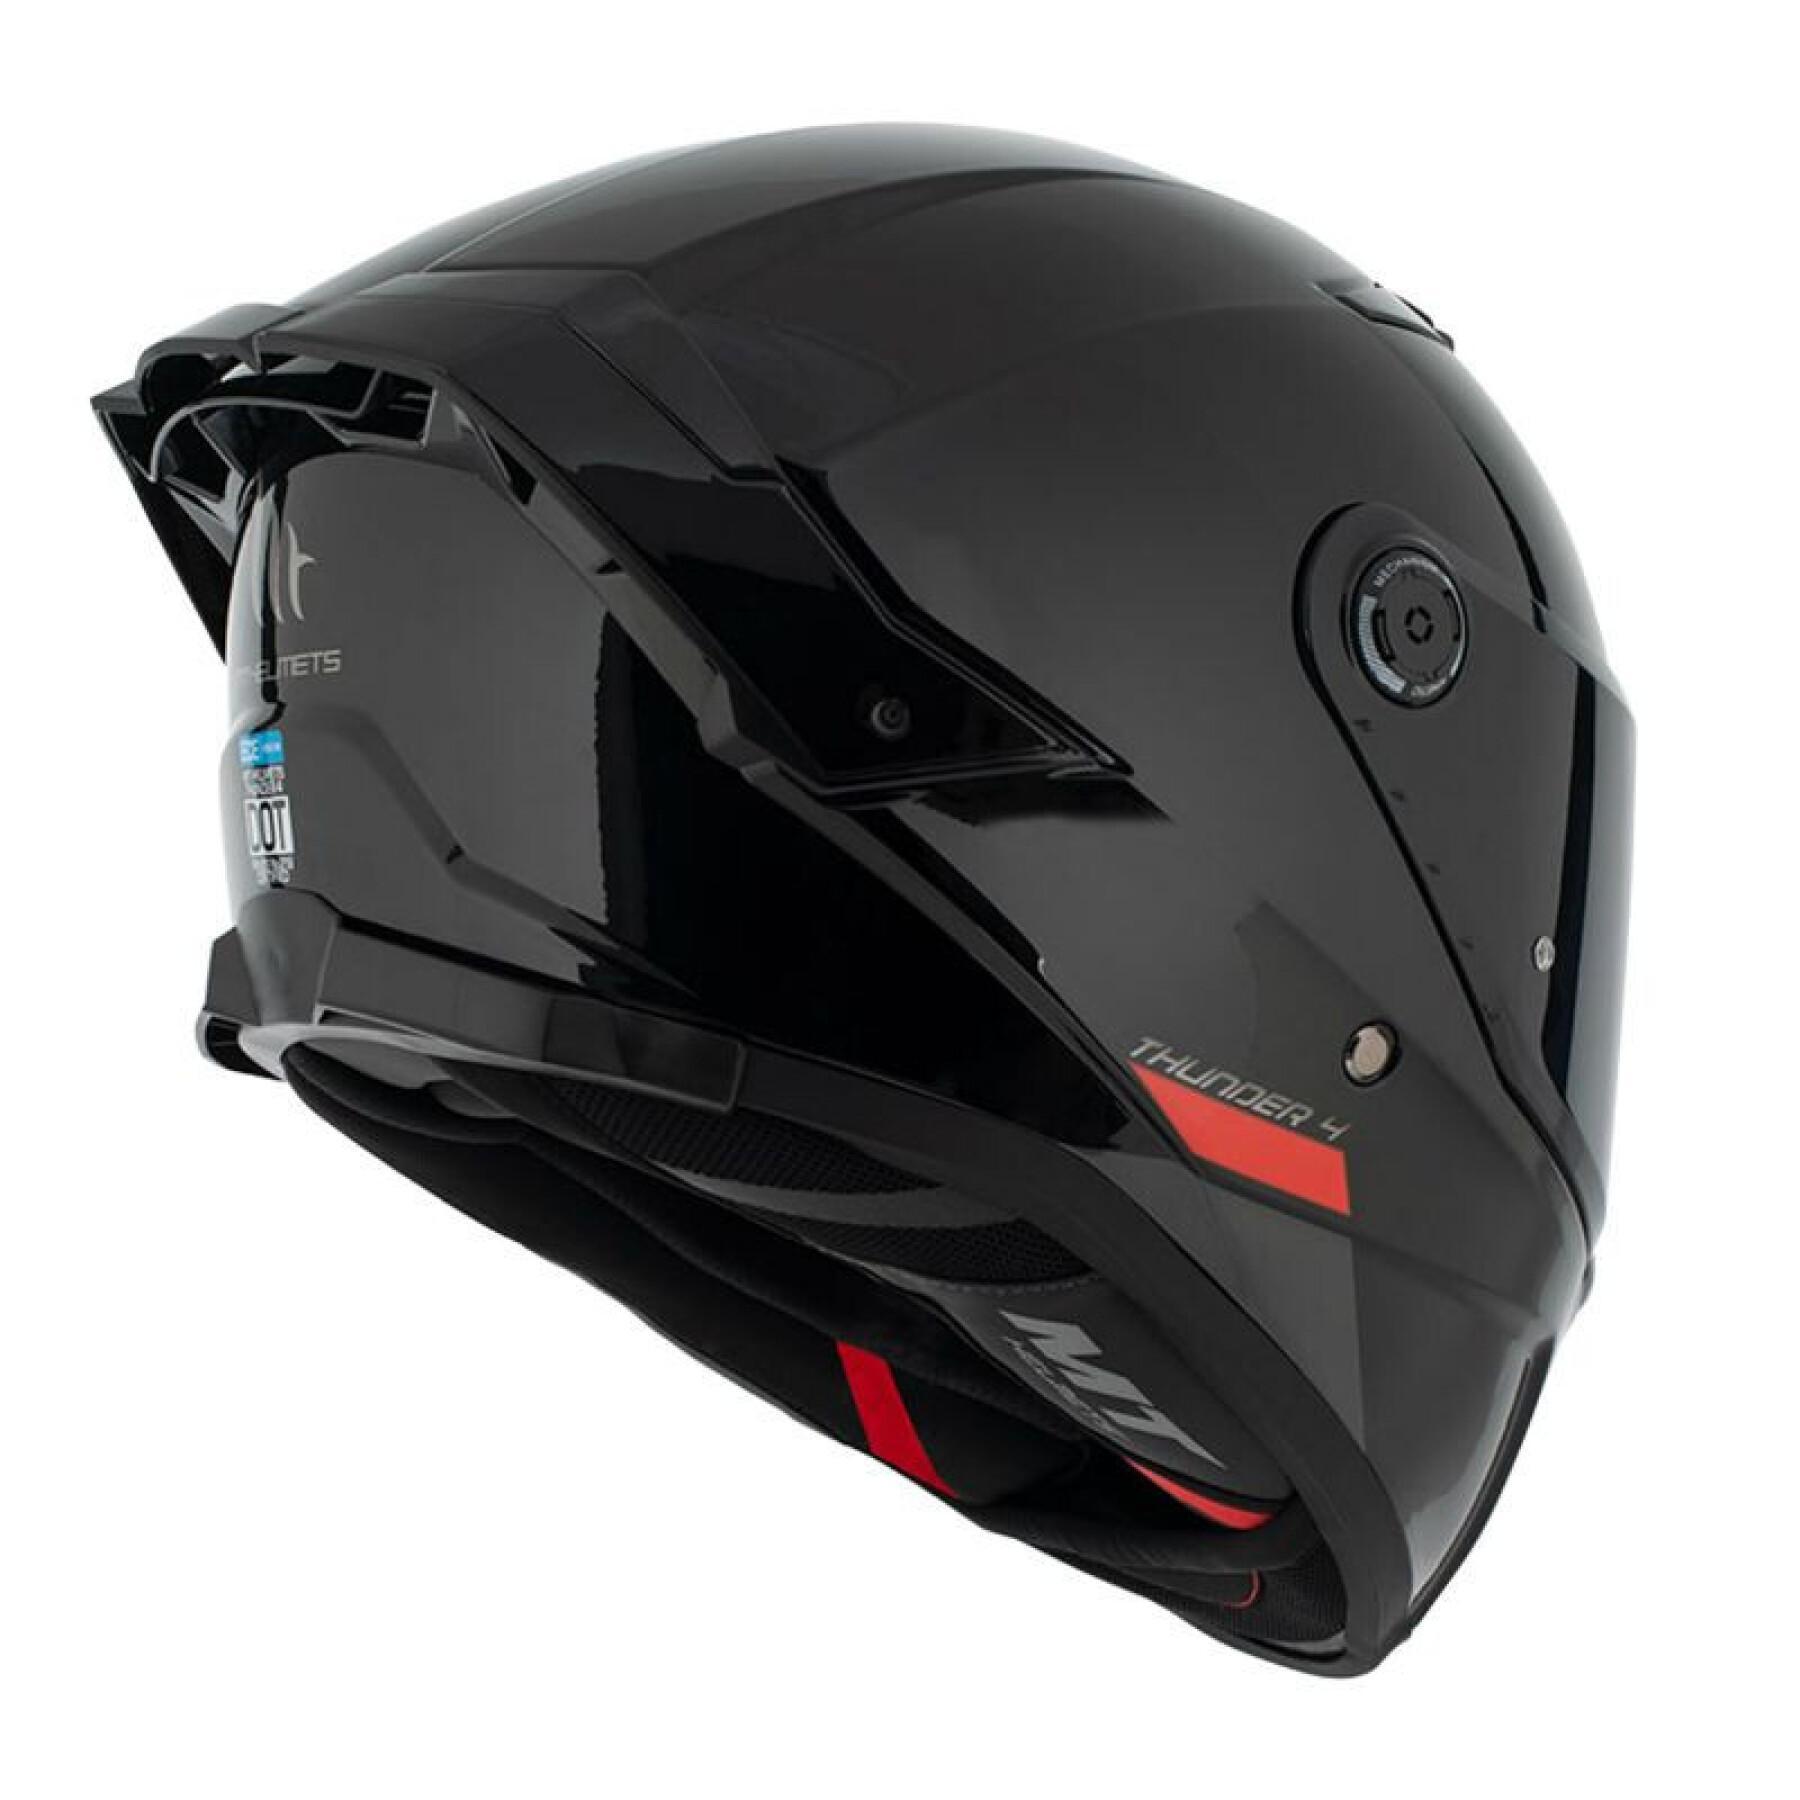 Full-face motorcycle helmet, dual shield / pinlock ready MT Helmets Thunder 4 SV